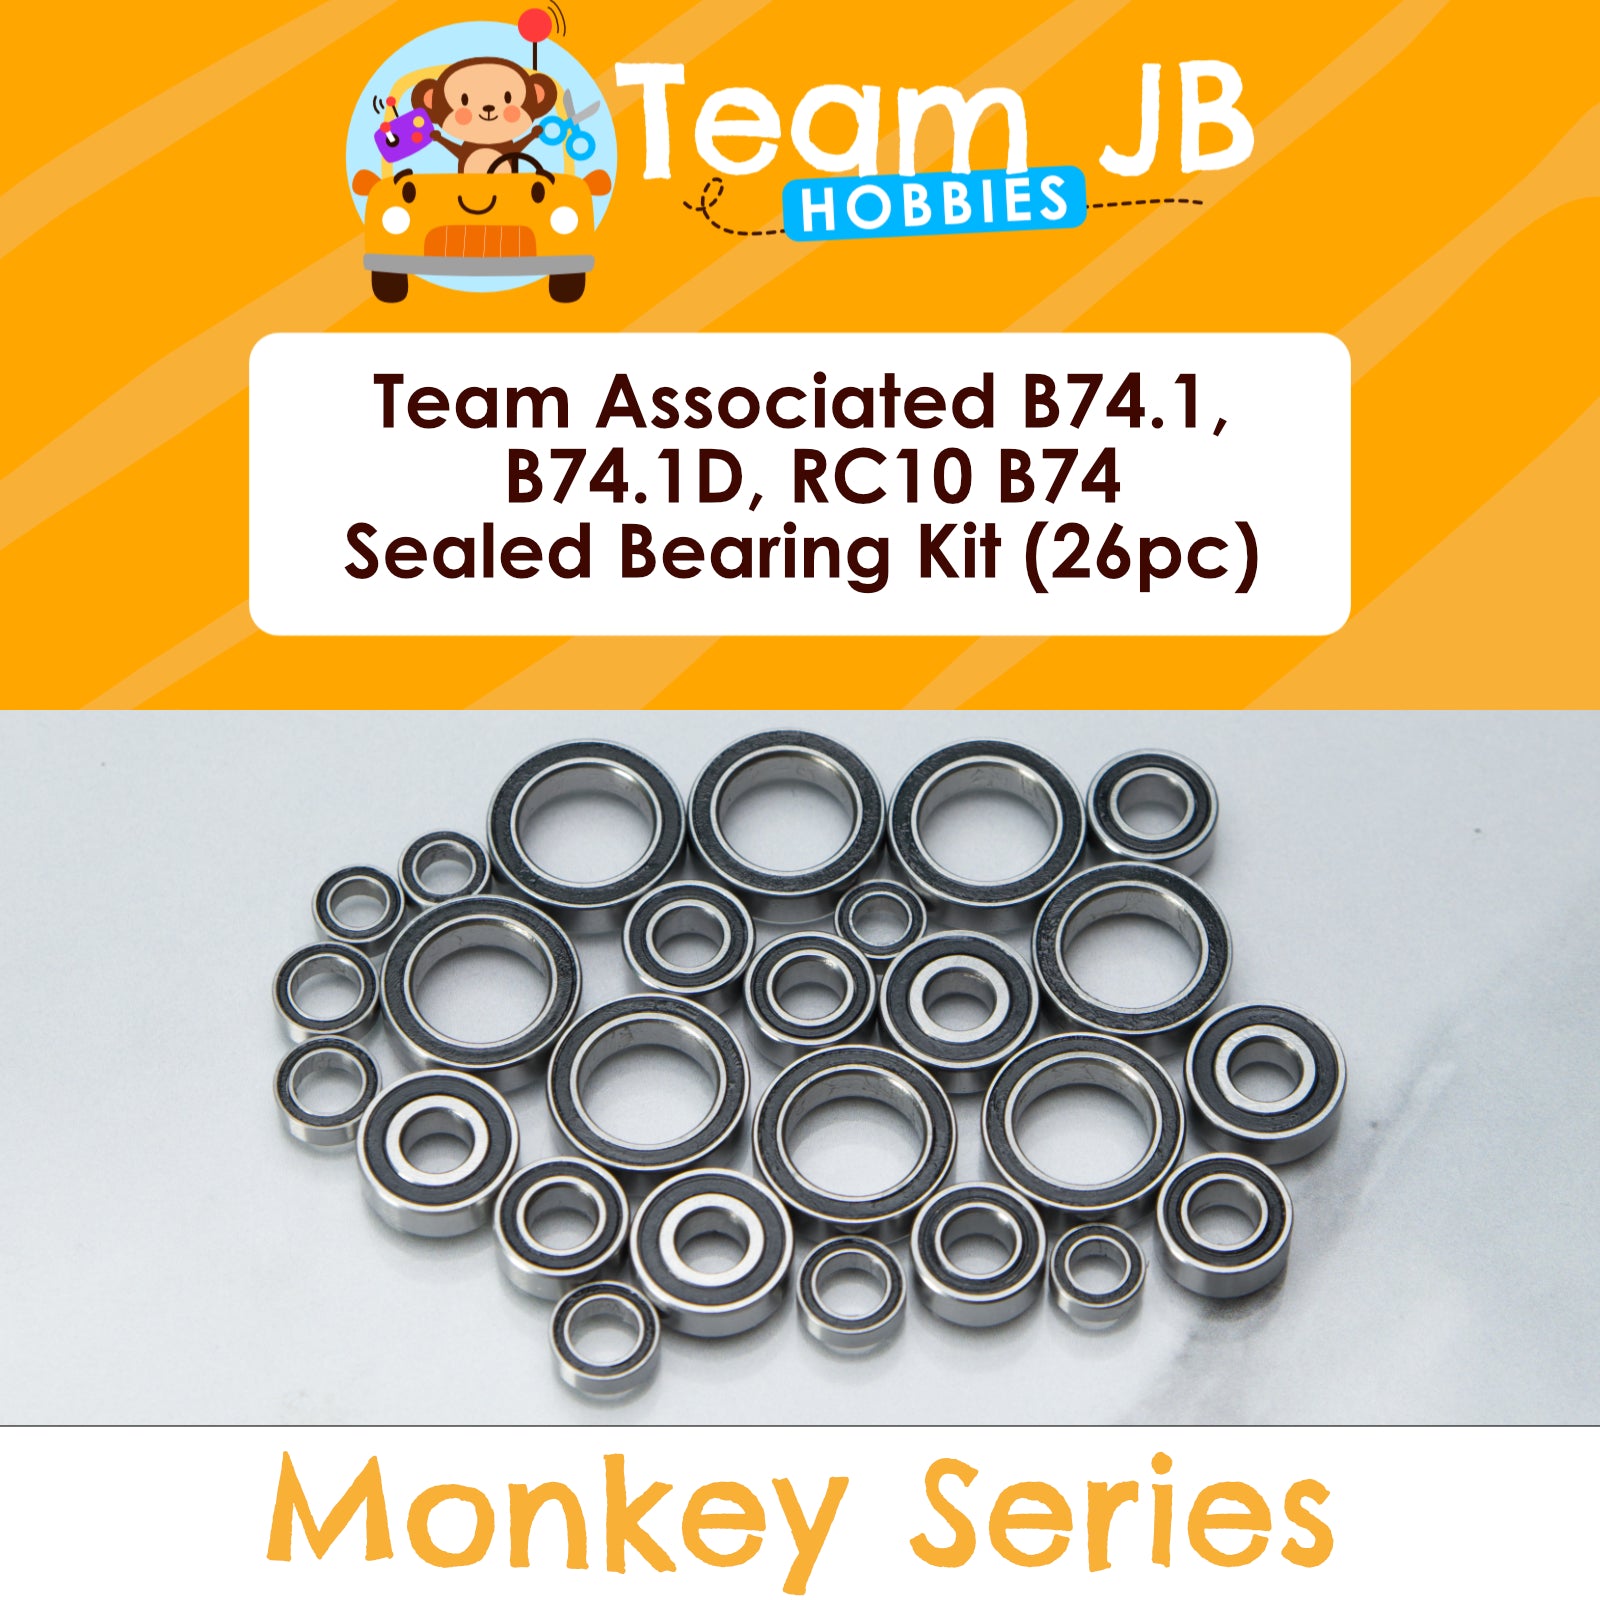 Team Associated B74.1, B74.1D, RC10 B74 - Sealed Bearing Kit